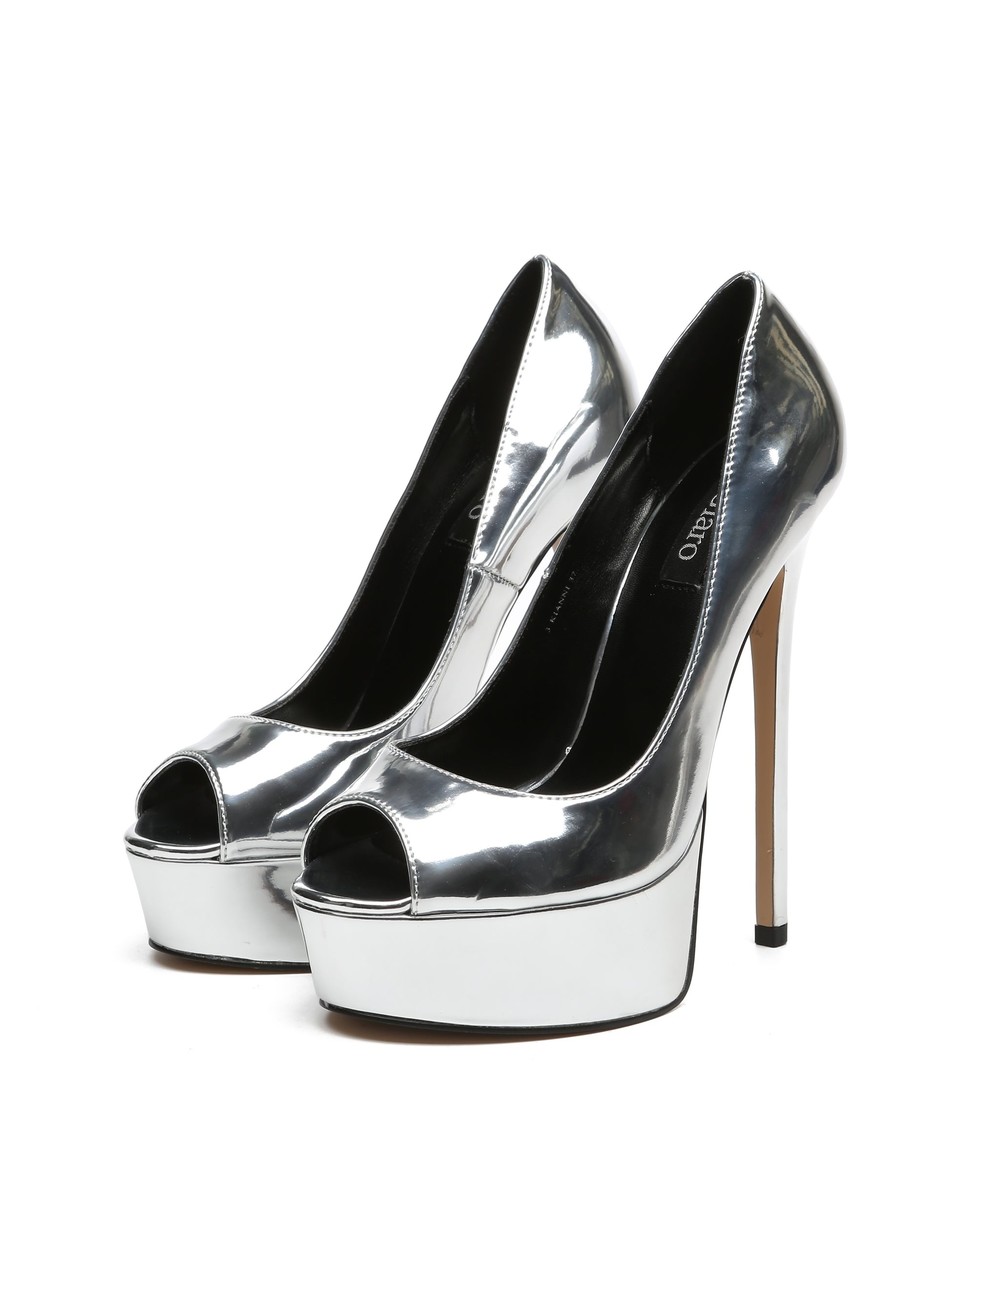 Giaro High Heels brandstore - Giaro High Heels